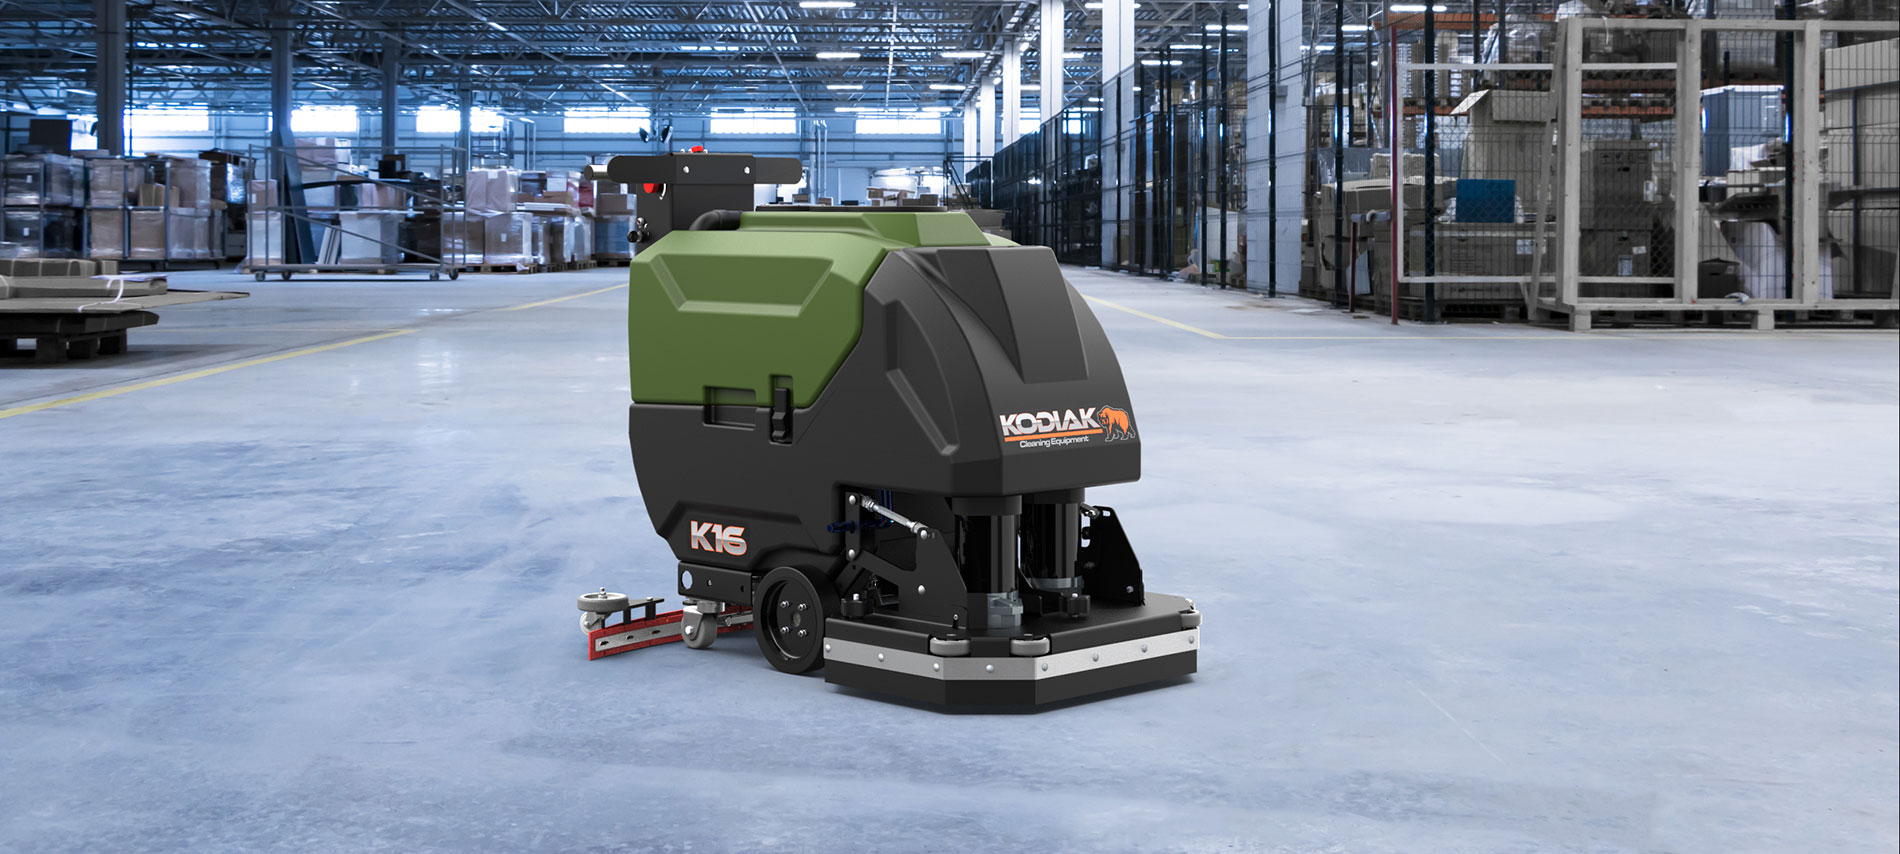 Kodiak Floor Scrubber Product - PSI Product